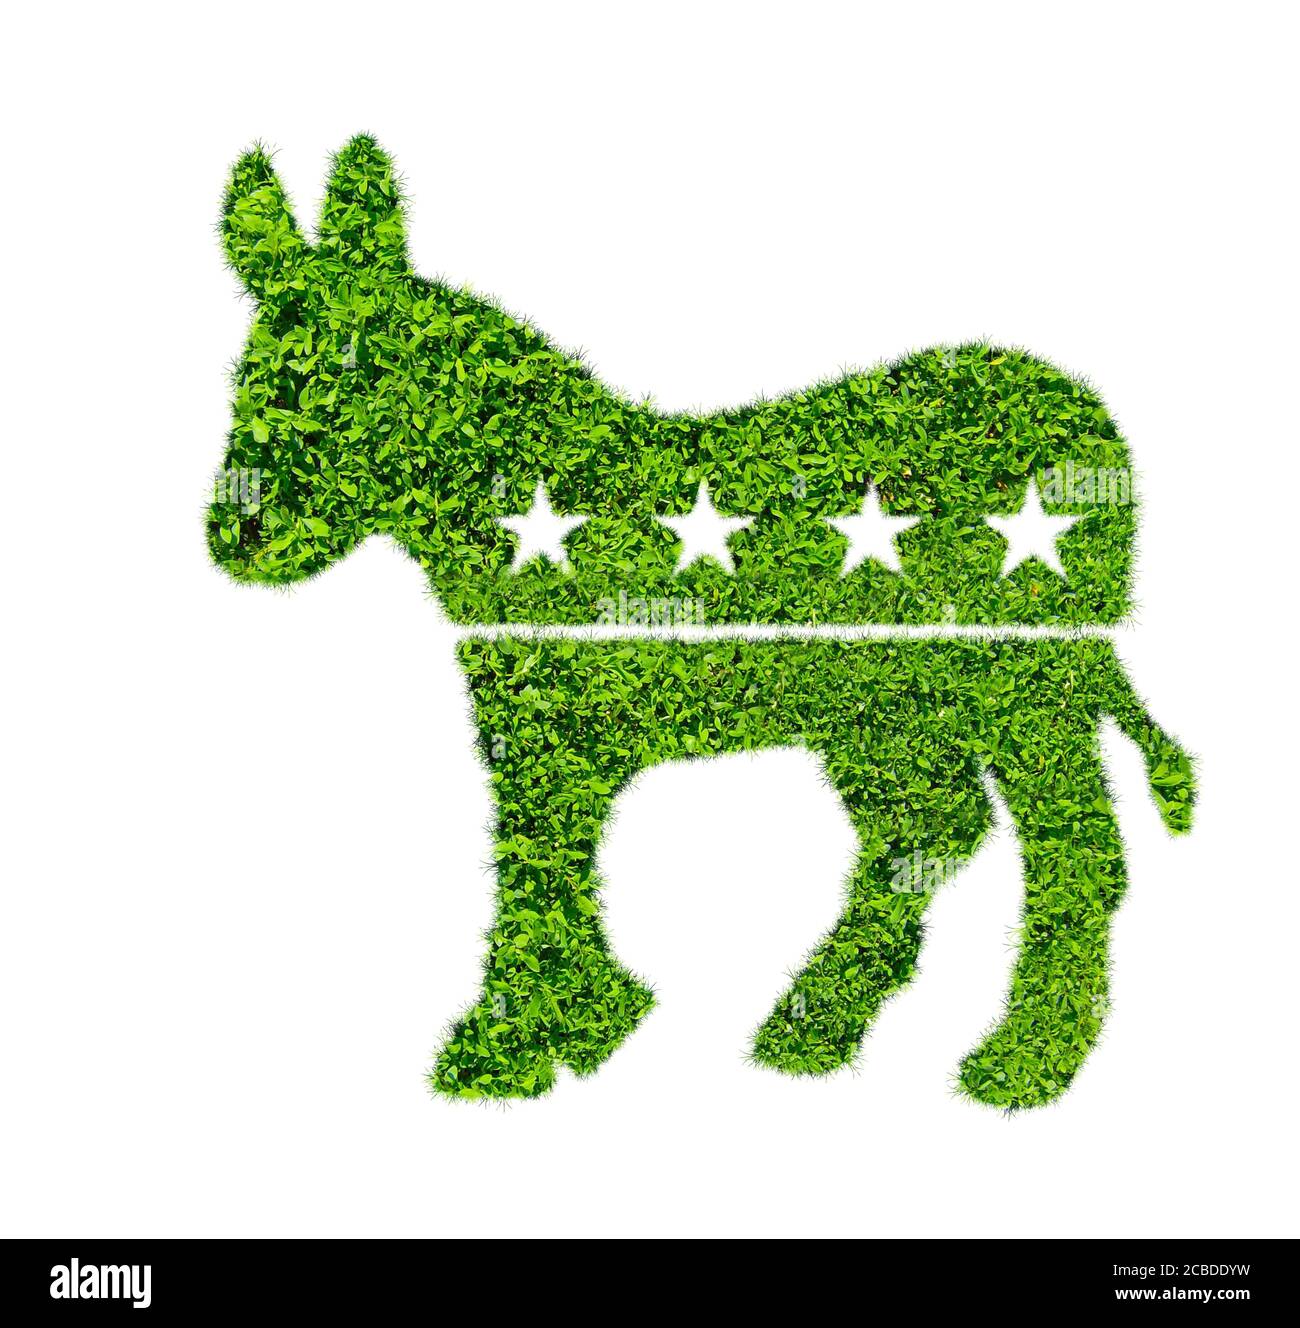 Democratic Party - donkey logo icon Stock Photo